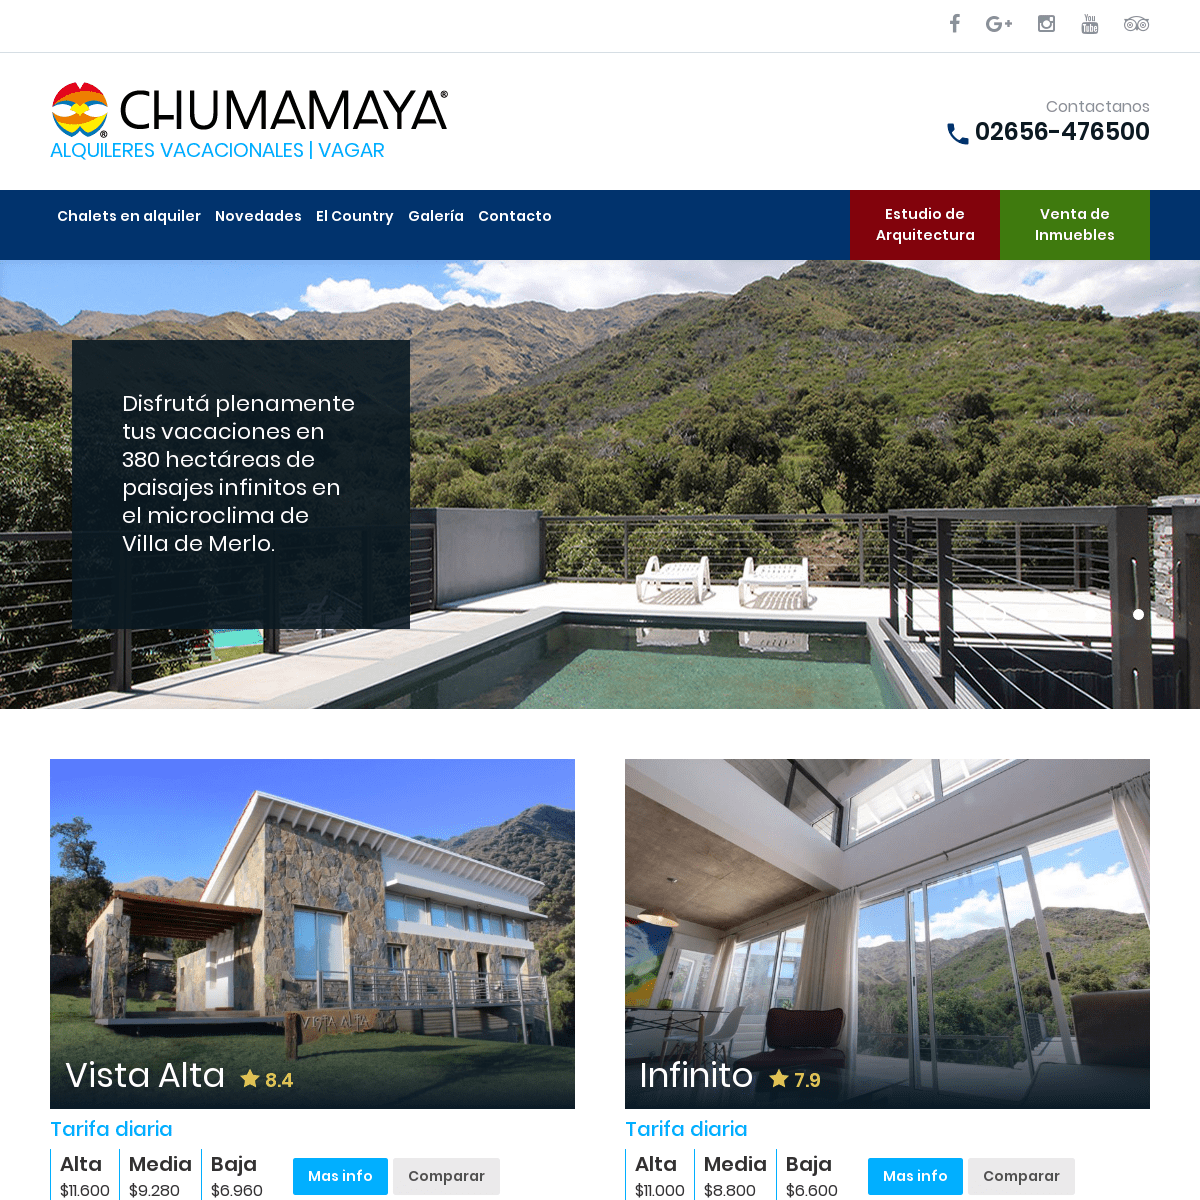 A complete backup of chumamaya.com